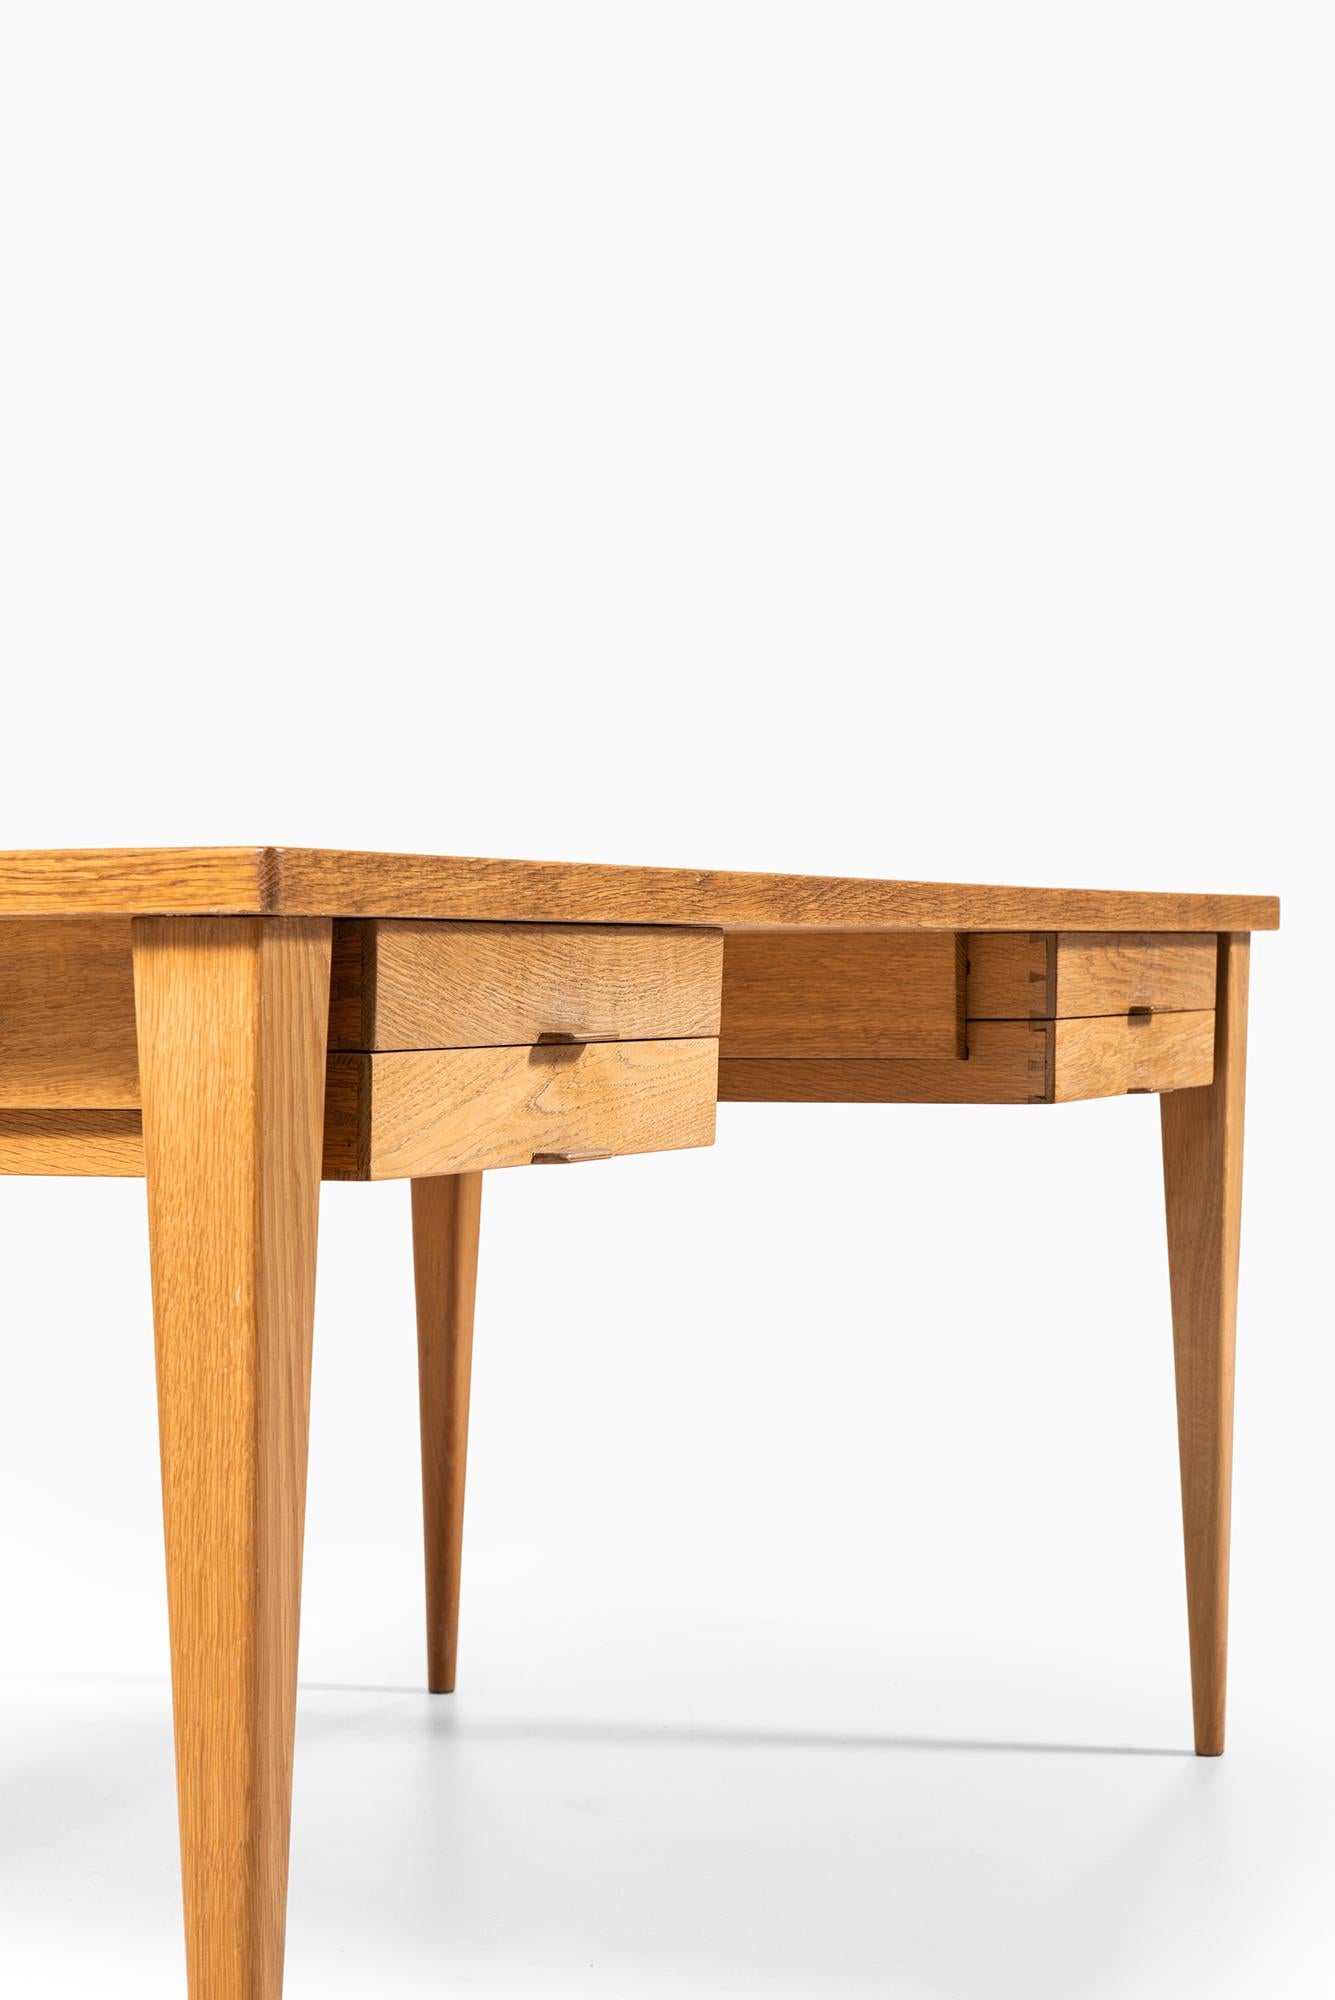 Oak Nanna Ditzel Desk by Poul Kolds Savværk in Denmark